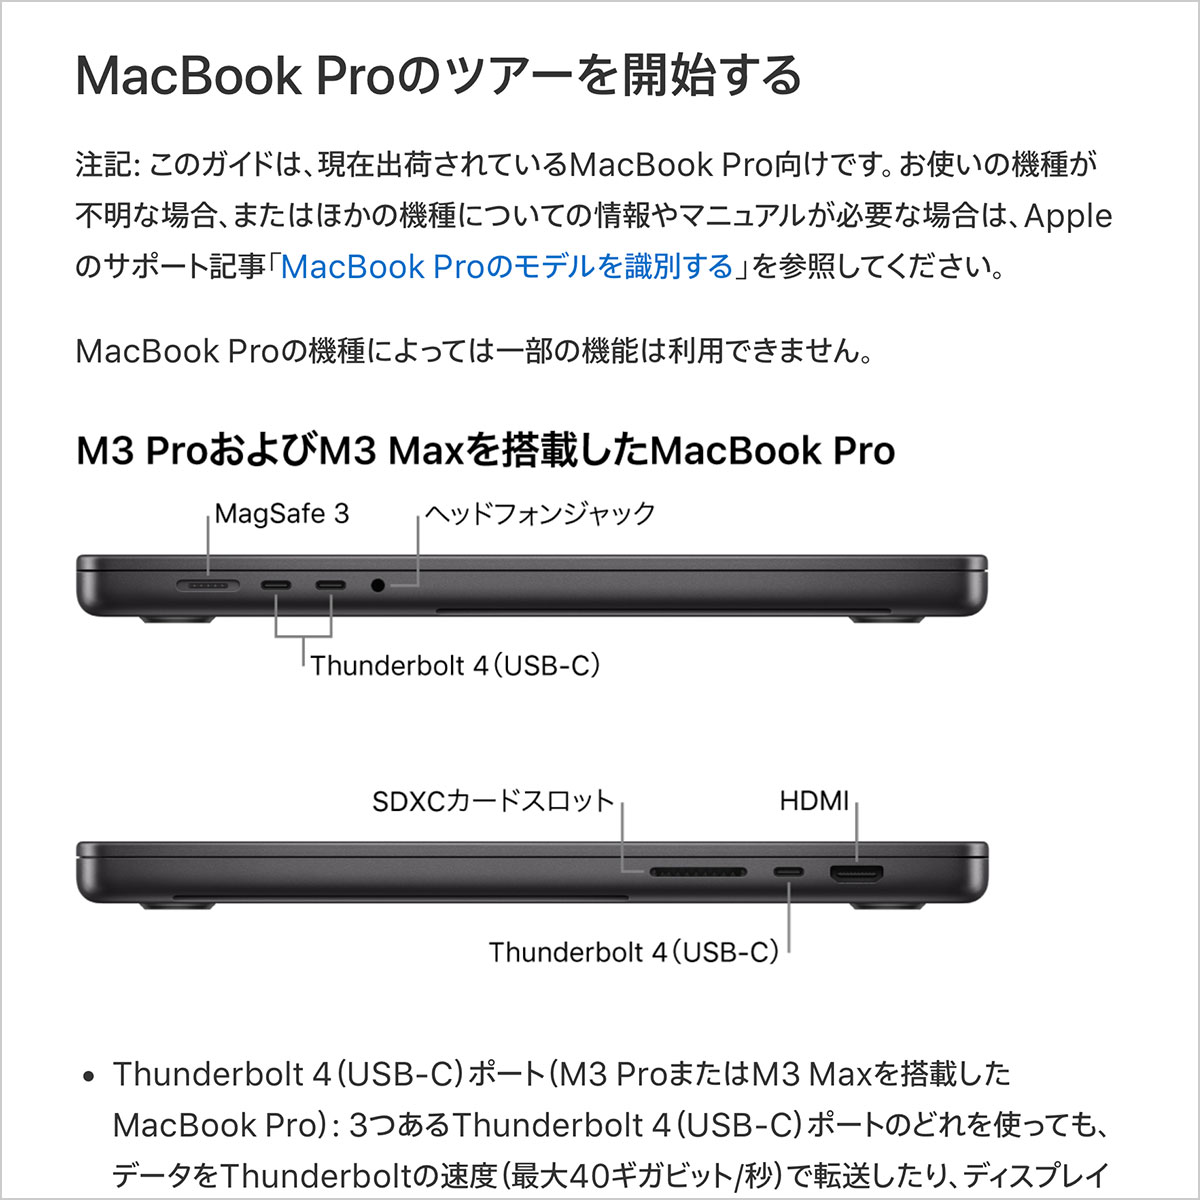 MacBook Proの基本